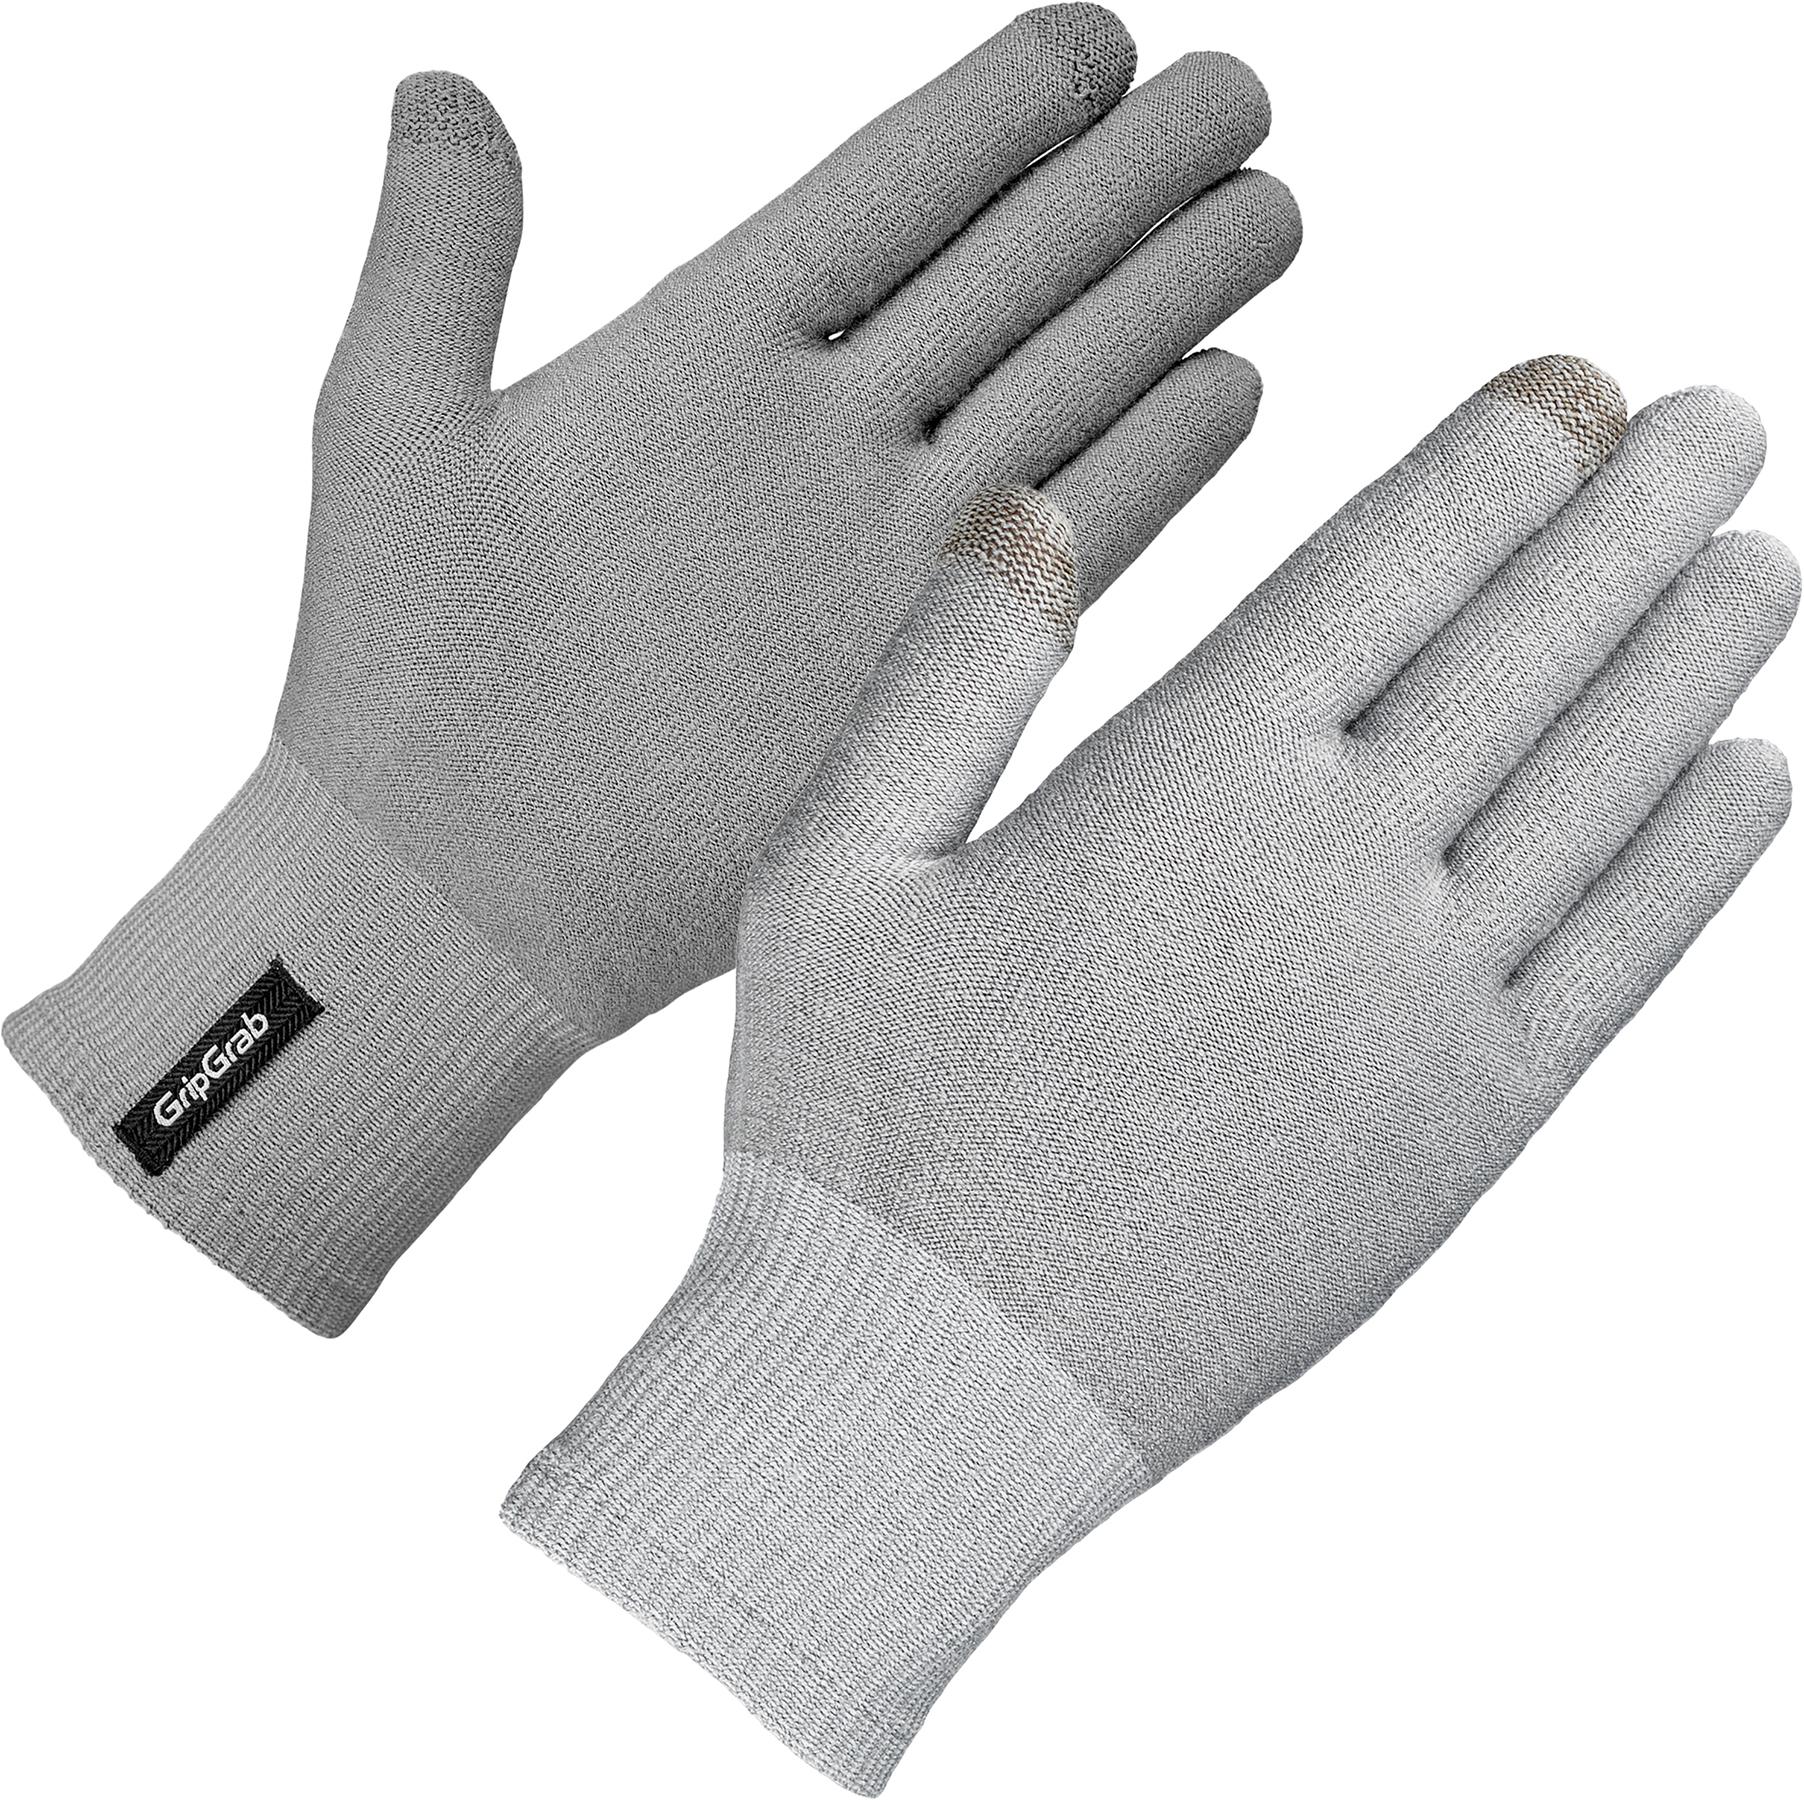 Gripgrab Merino Liner Gloves - Grey